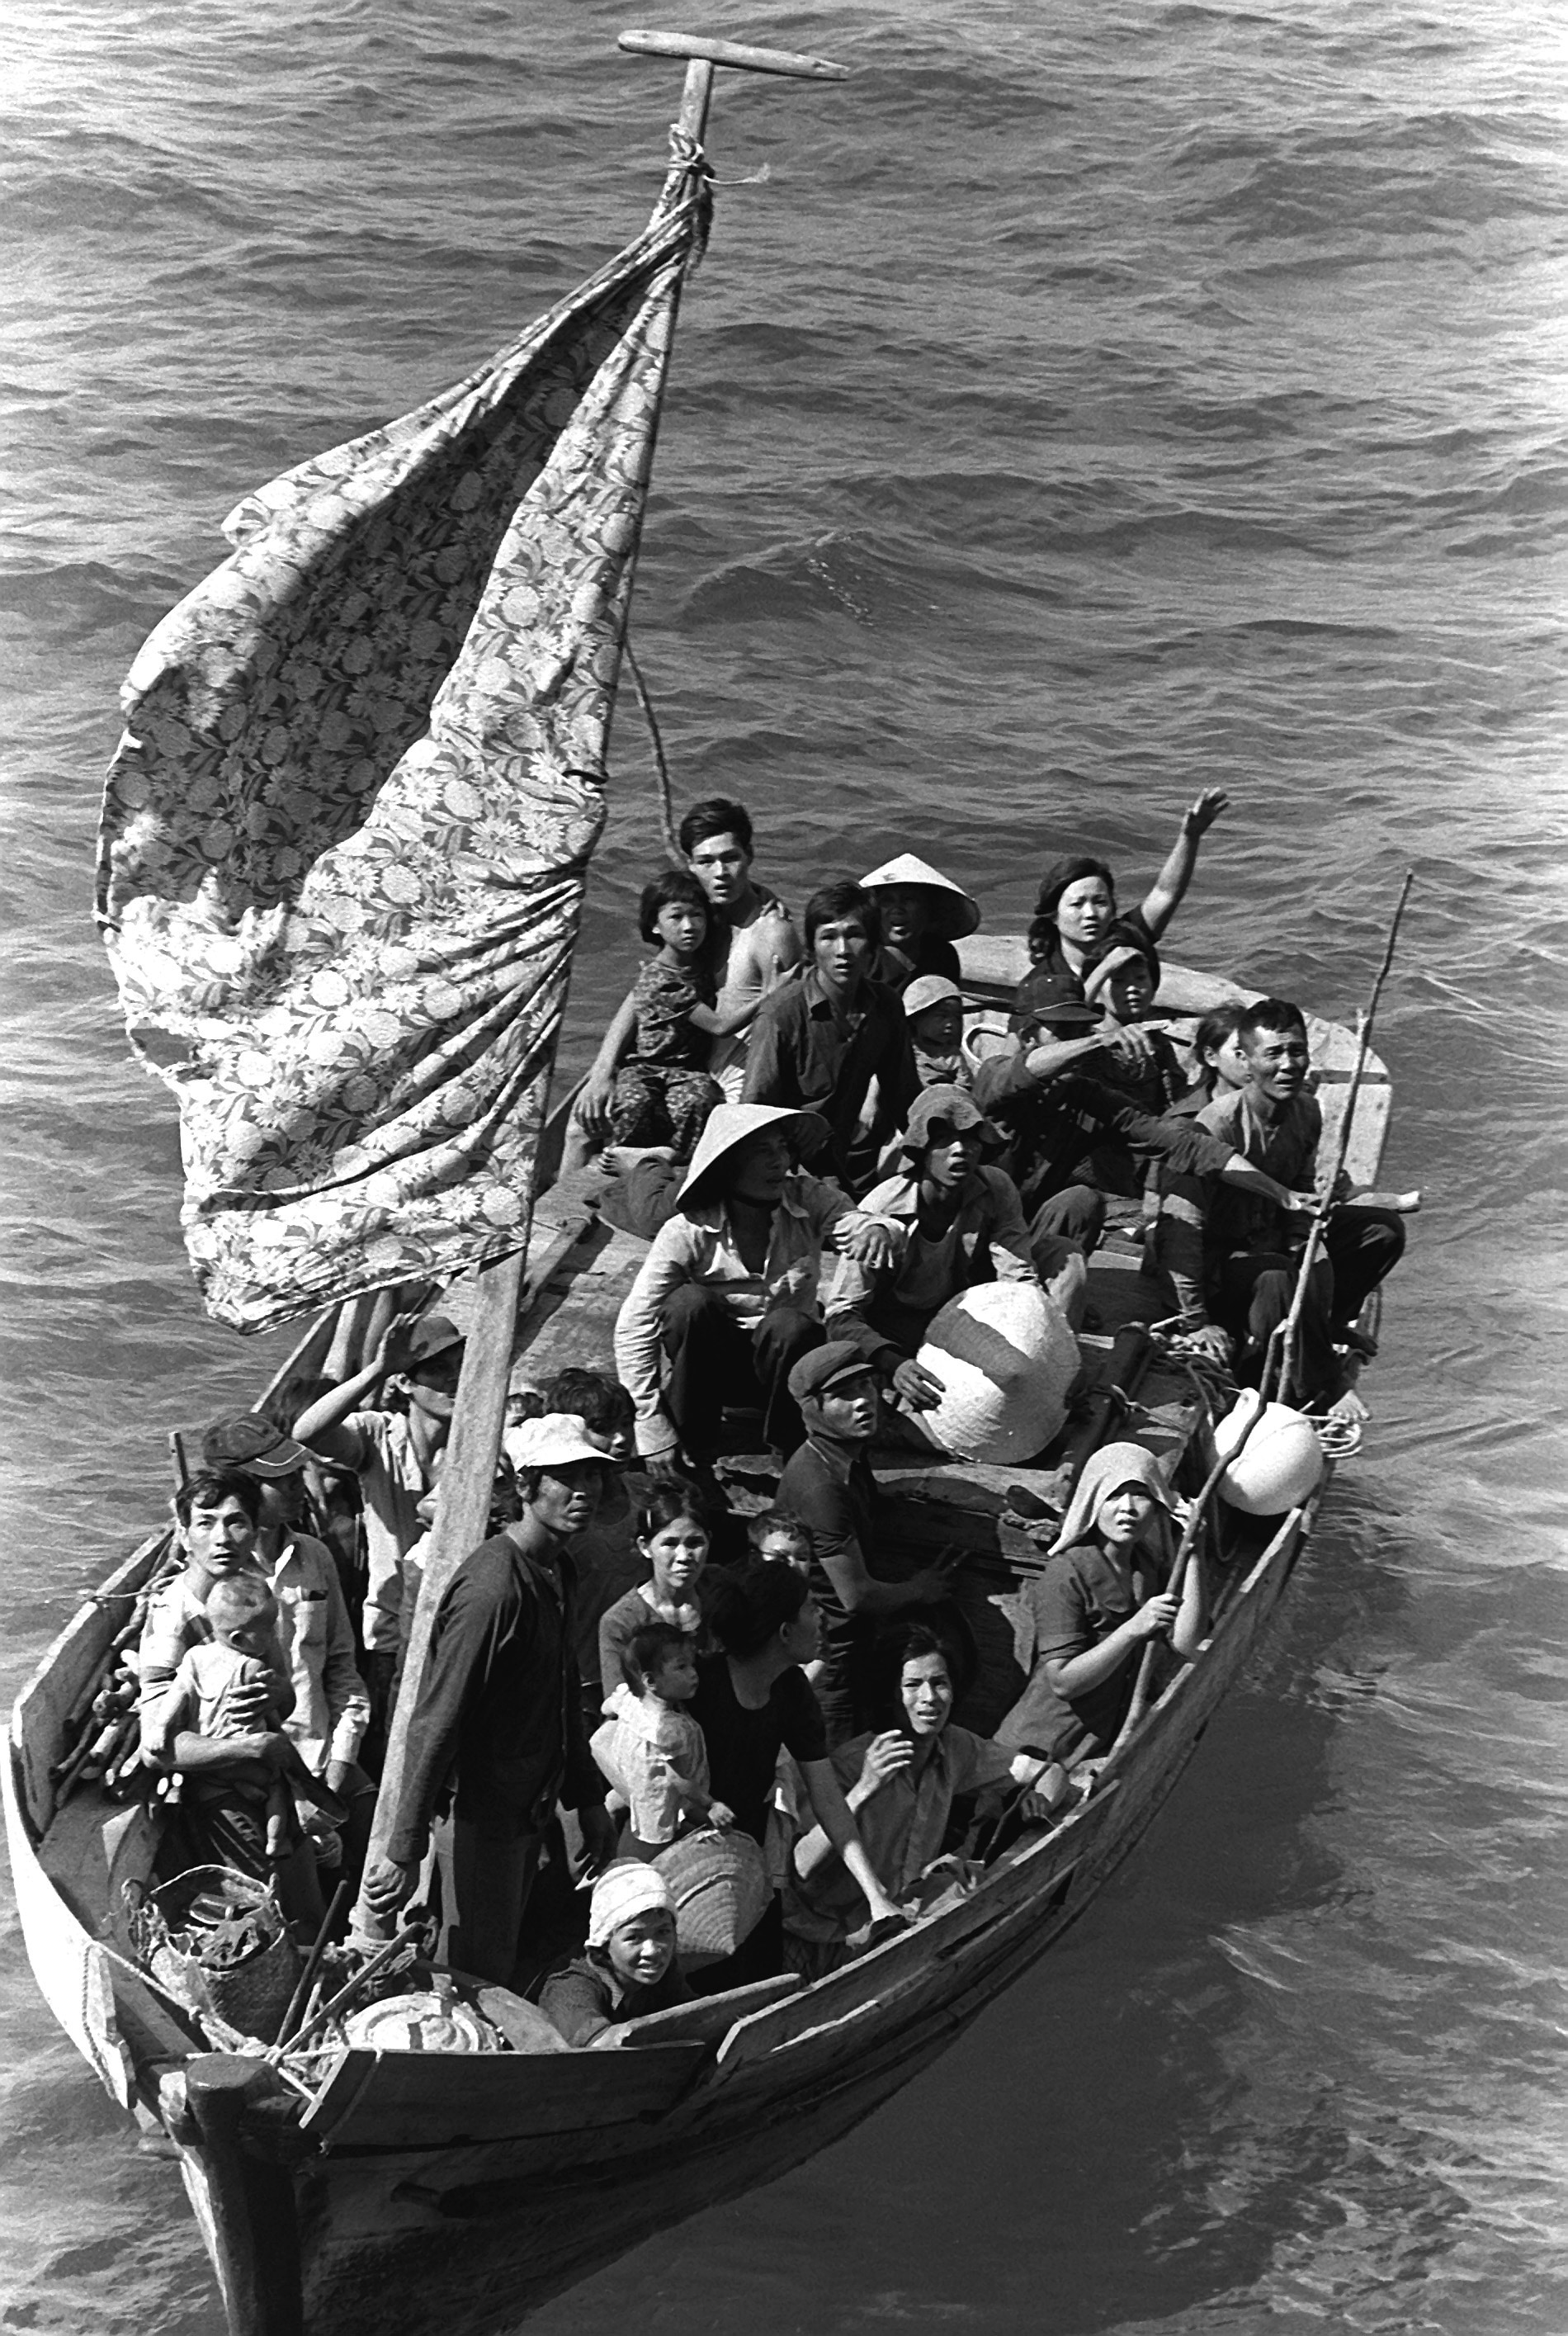 35 Vietnamese Refugees, Boat People, nautical vessel, water